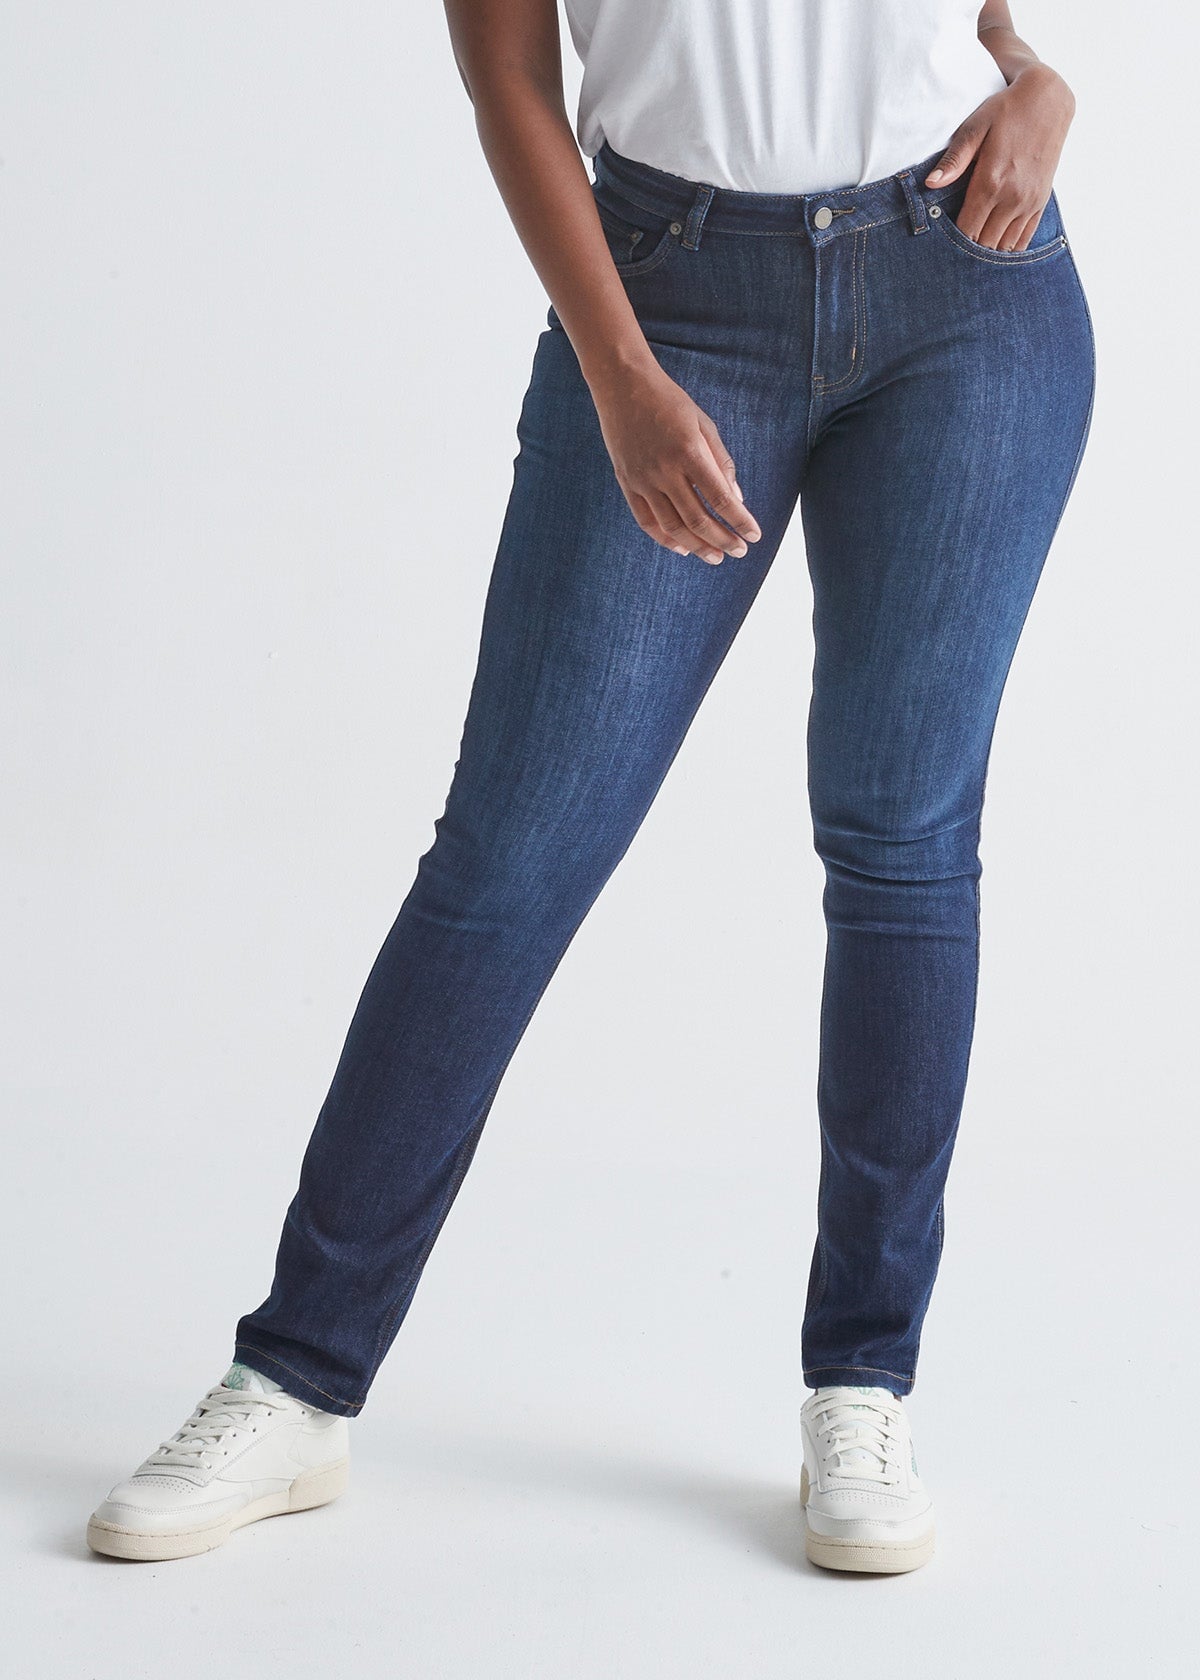 Women's Stretch Jeans - Performance Denim by DUER